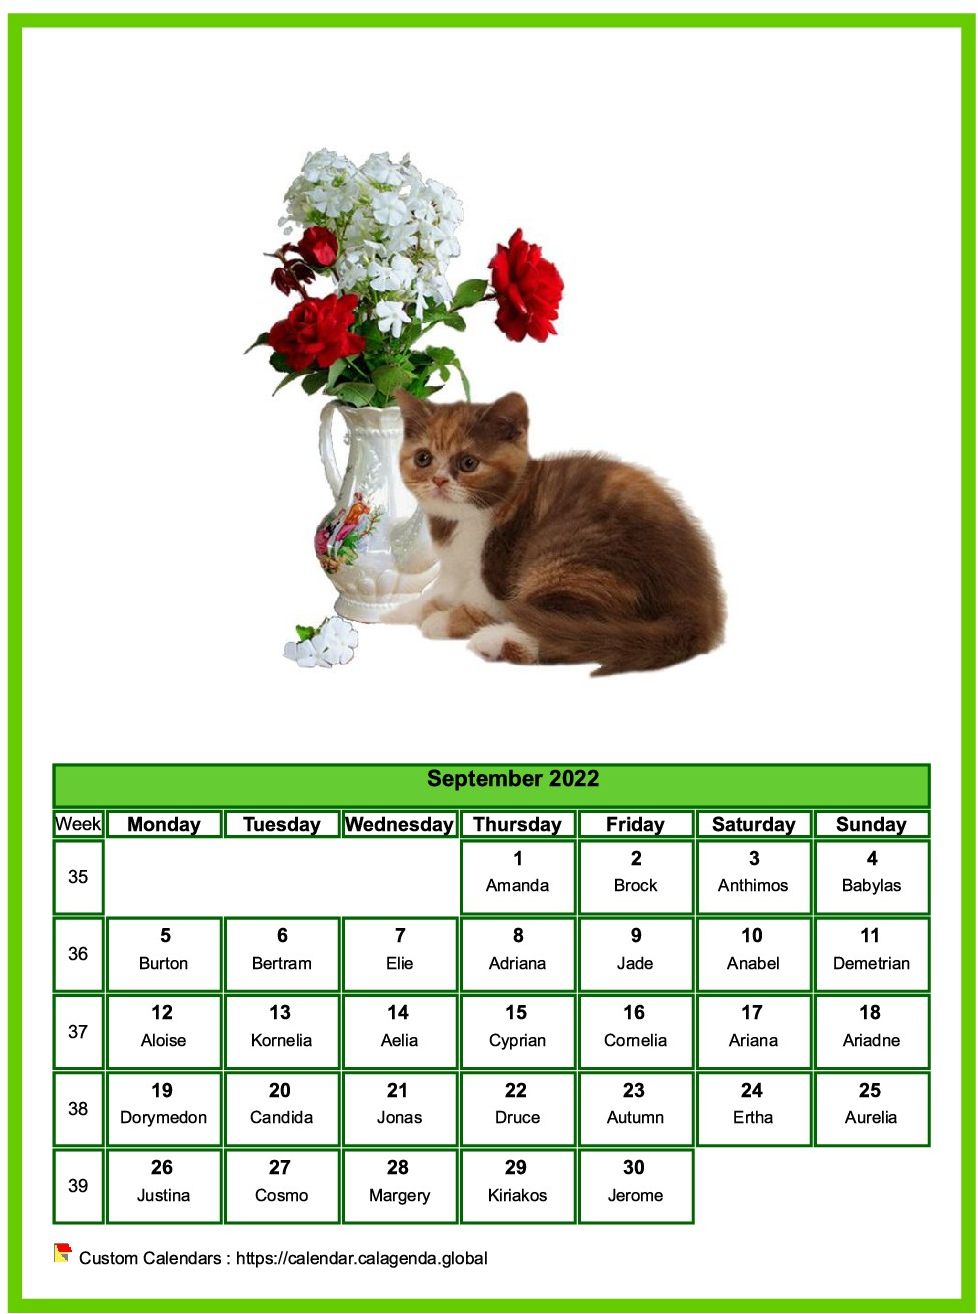 Cat Calendars